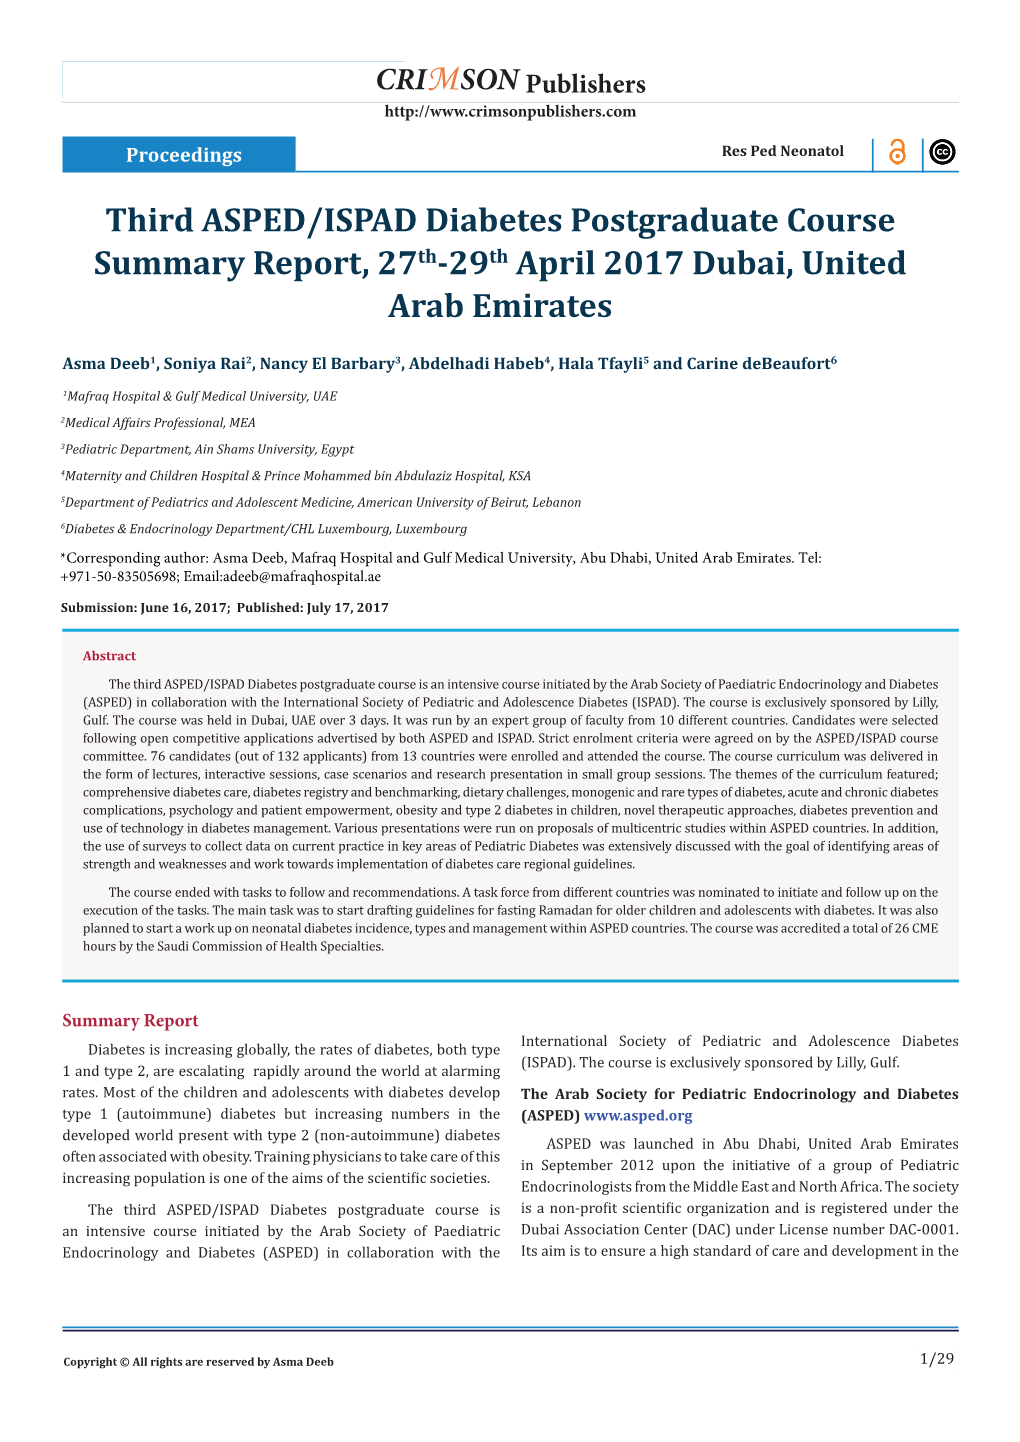 Third ASPED/ISPAD Diabetes Postgraduate Course Summary Report, 27Th-29Th April 2017 Dubai, United Arab Emirates